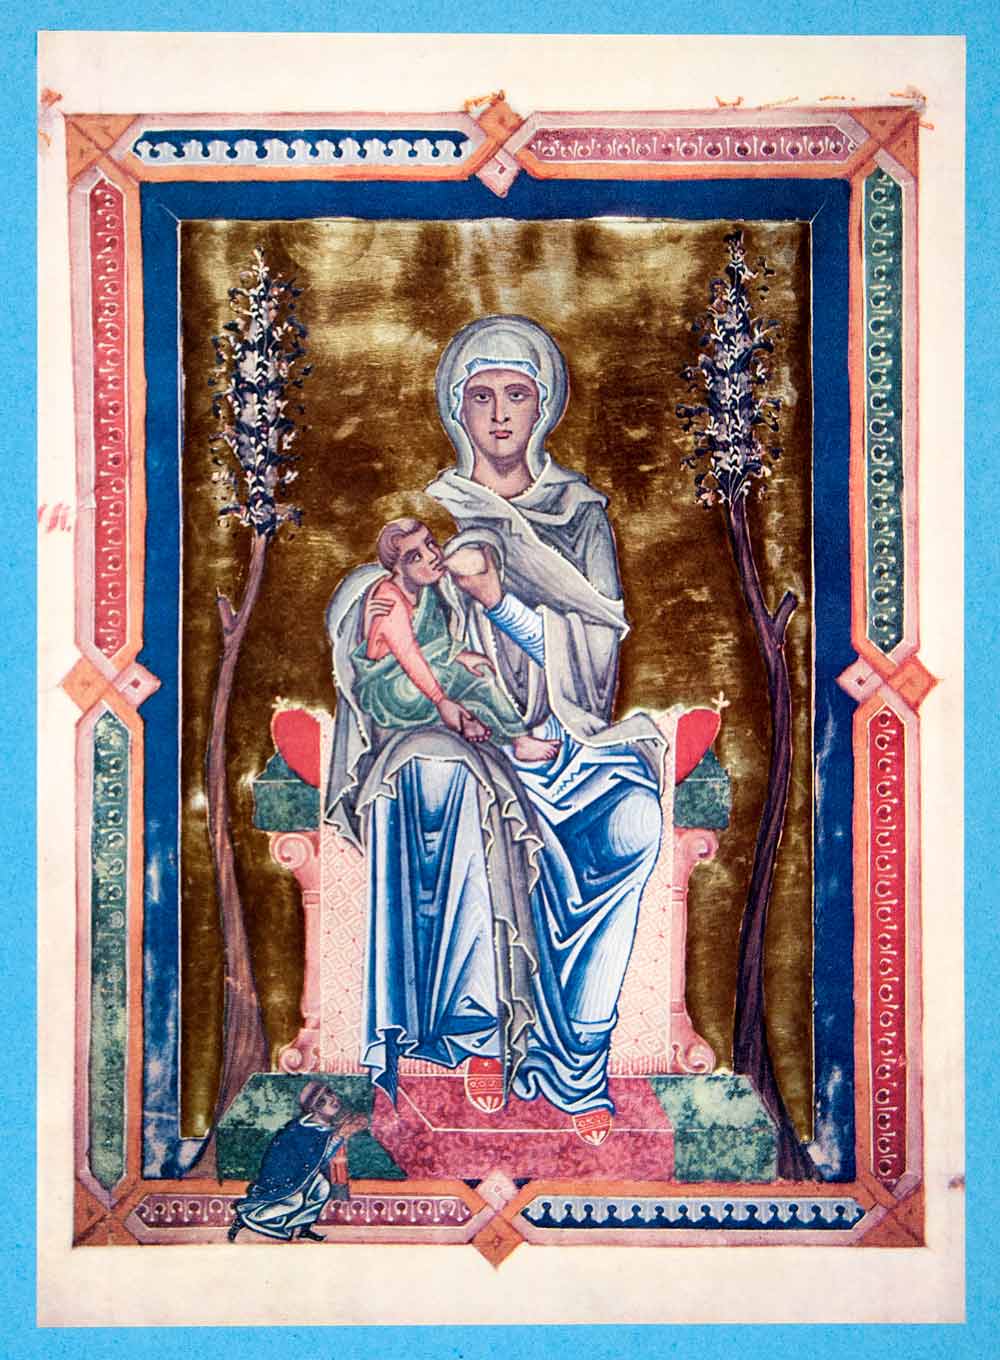 1969 Print Missal Seitenstetten Virgin Mary Child Border Monkey Religion XAV2